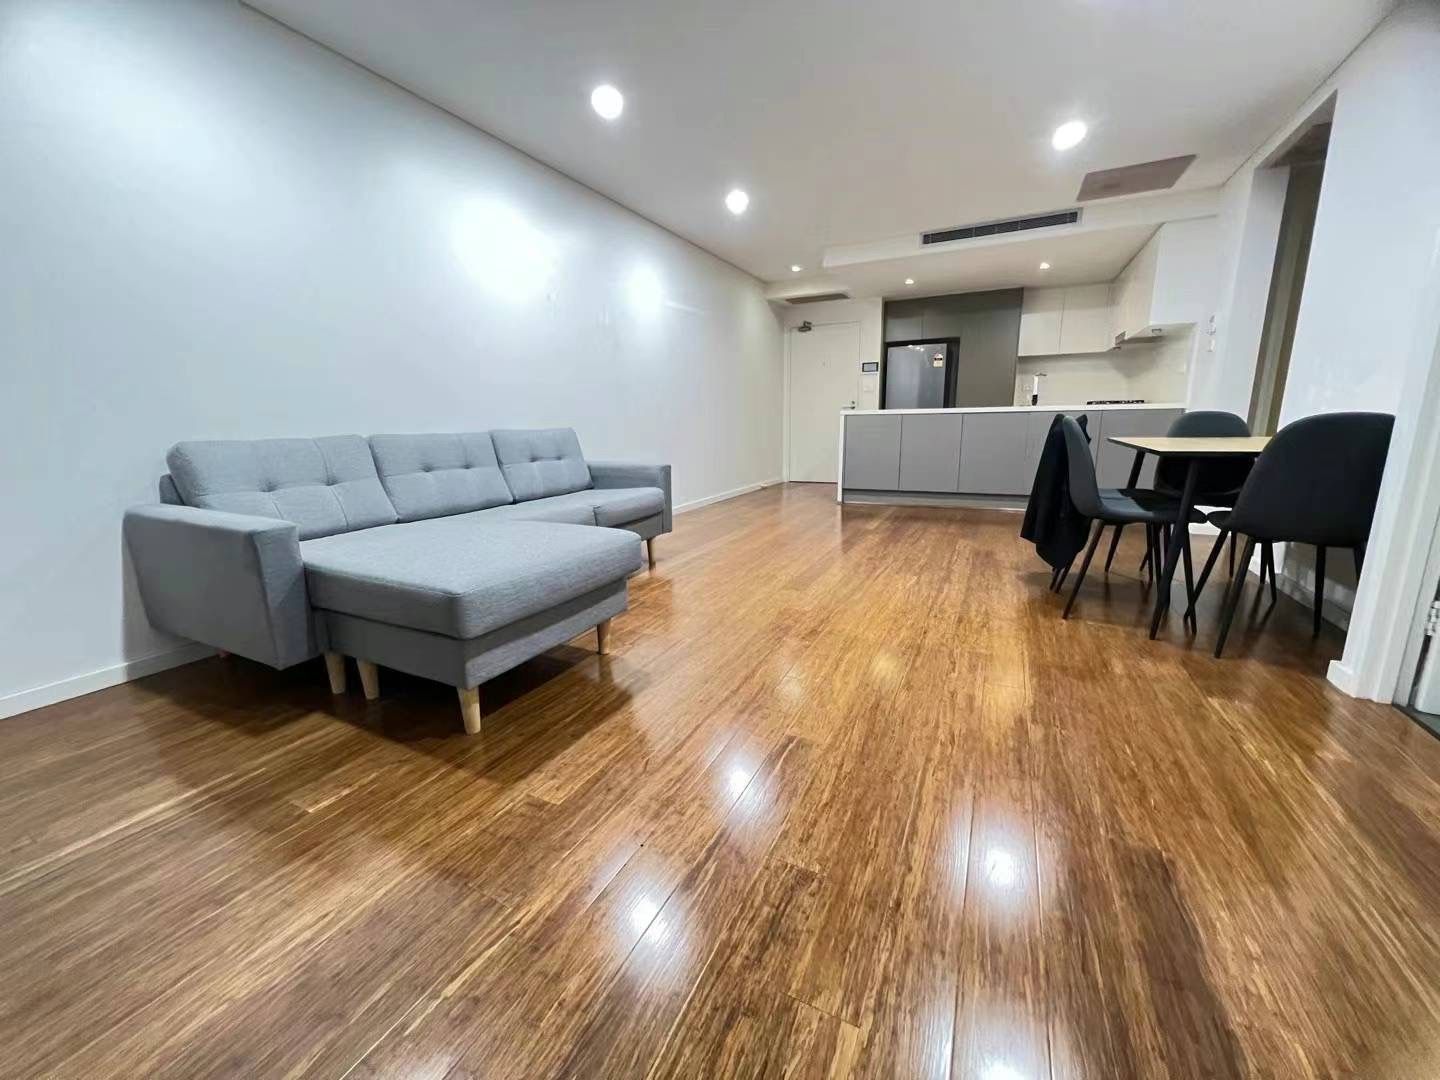 2 bedrooms Apartment / Unit / Flat in L6/19-21 Larkin Street CAMPERDOWN NSW, 2050